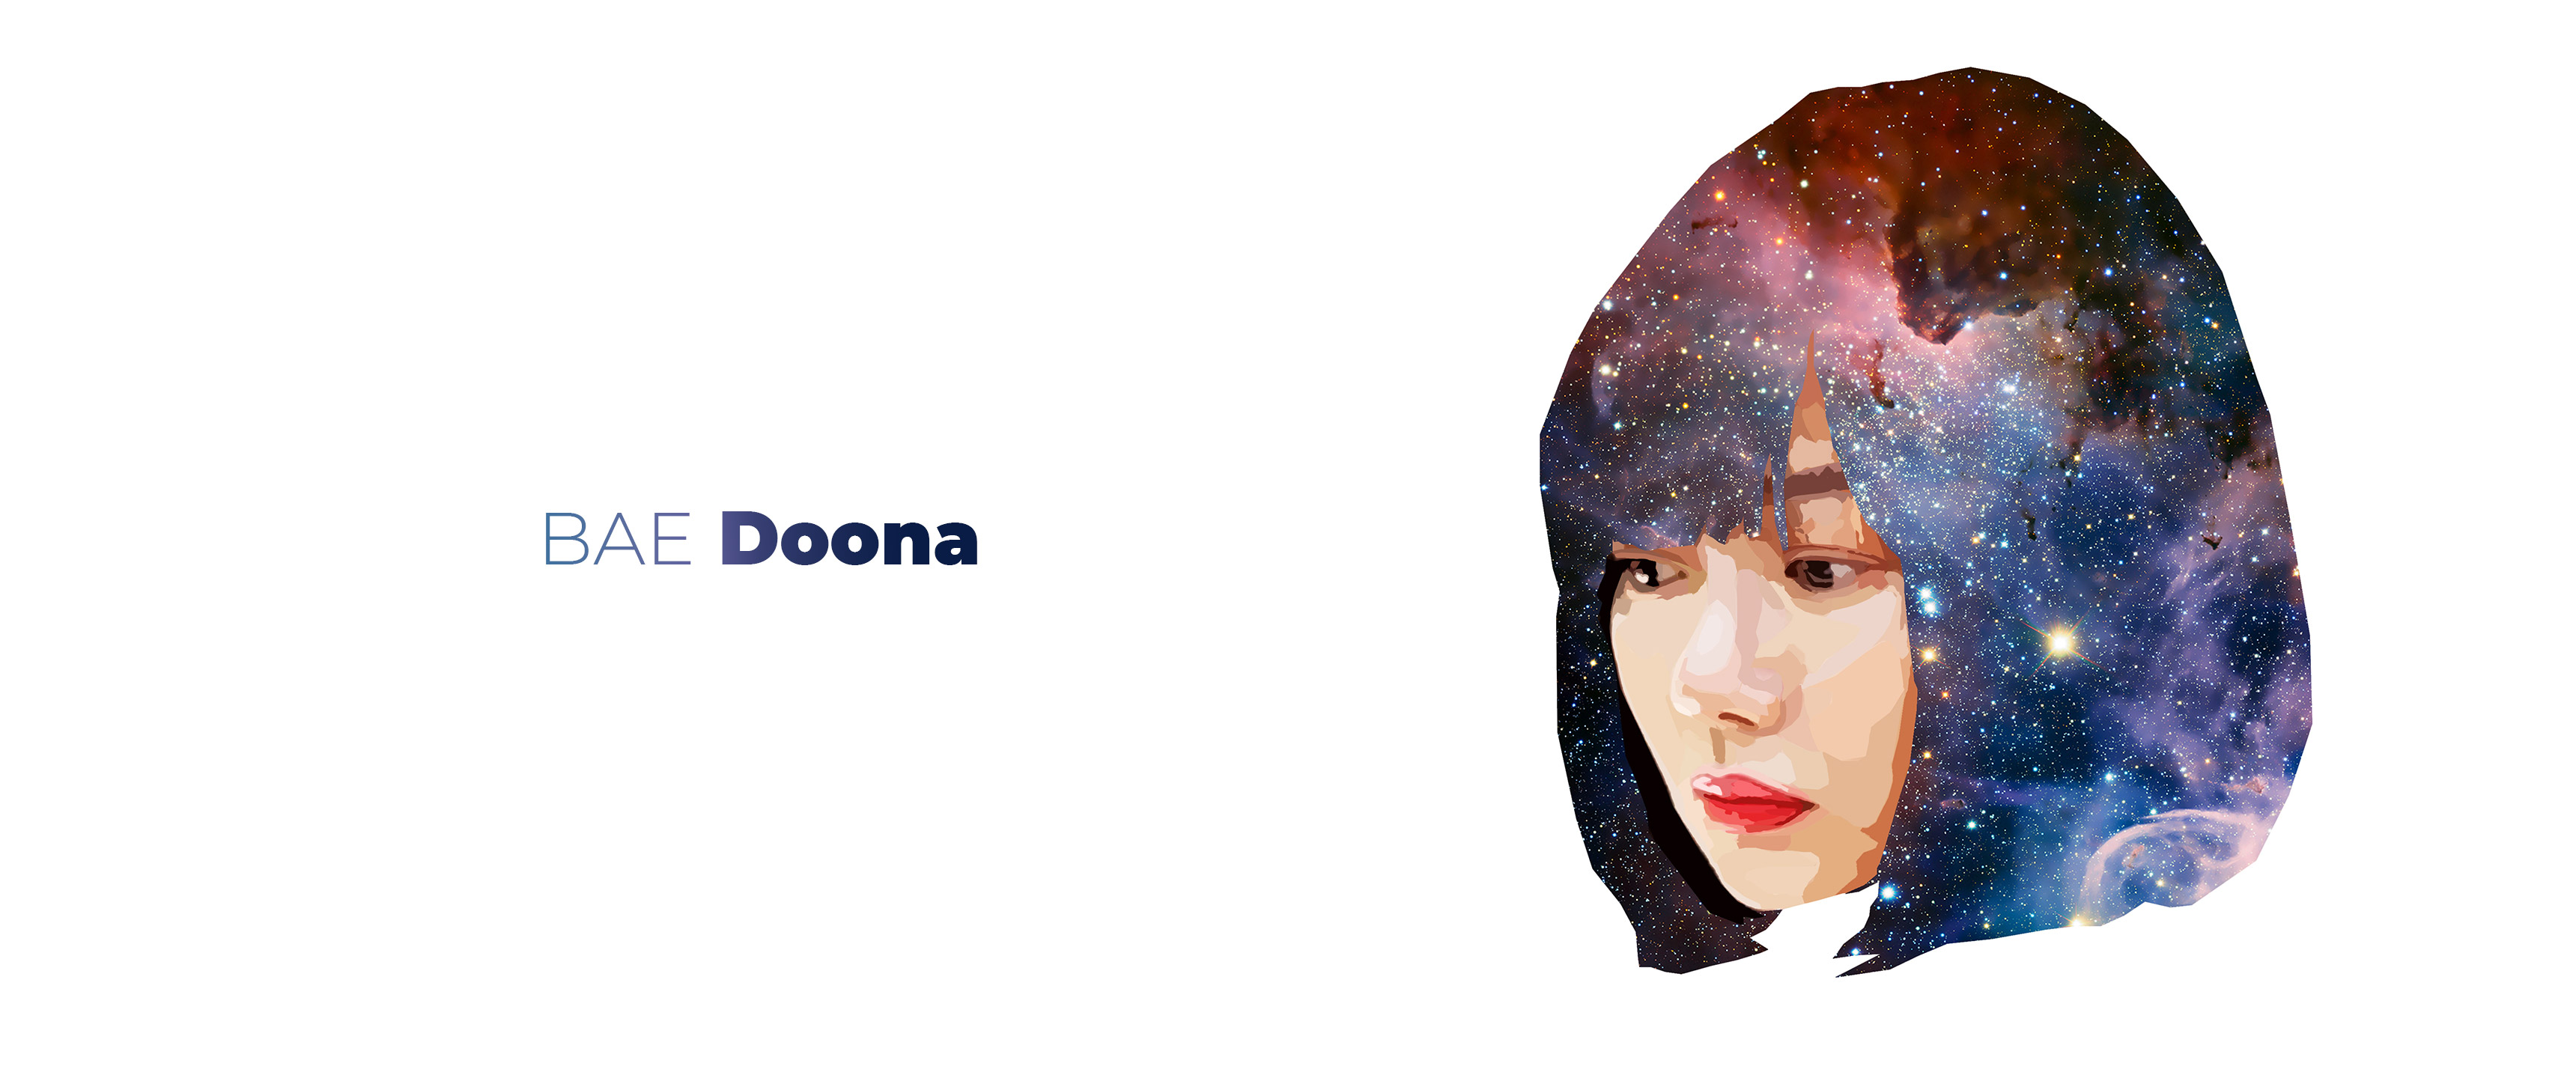 Doona Bae Sense 8 South Korea Korean Actress Celebrity Forest Of Secrets 3440x1440